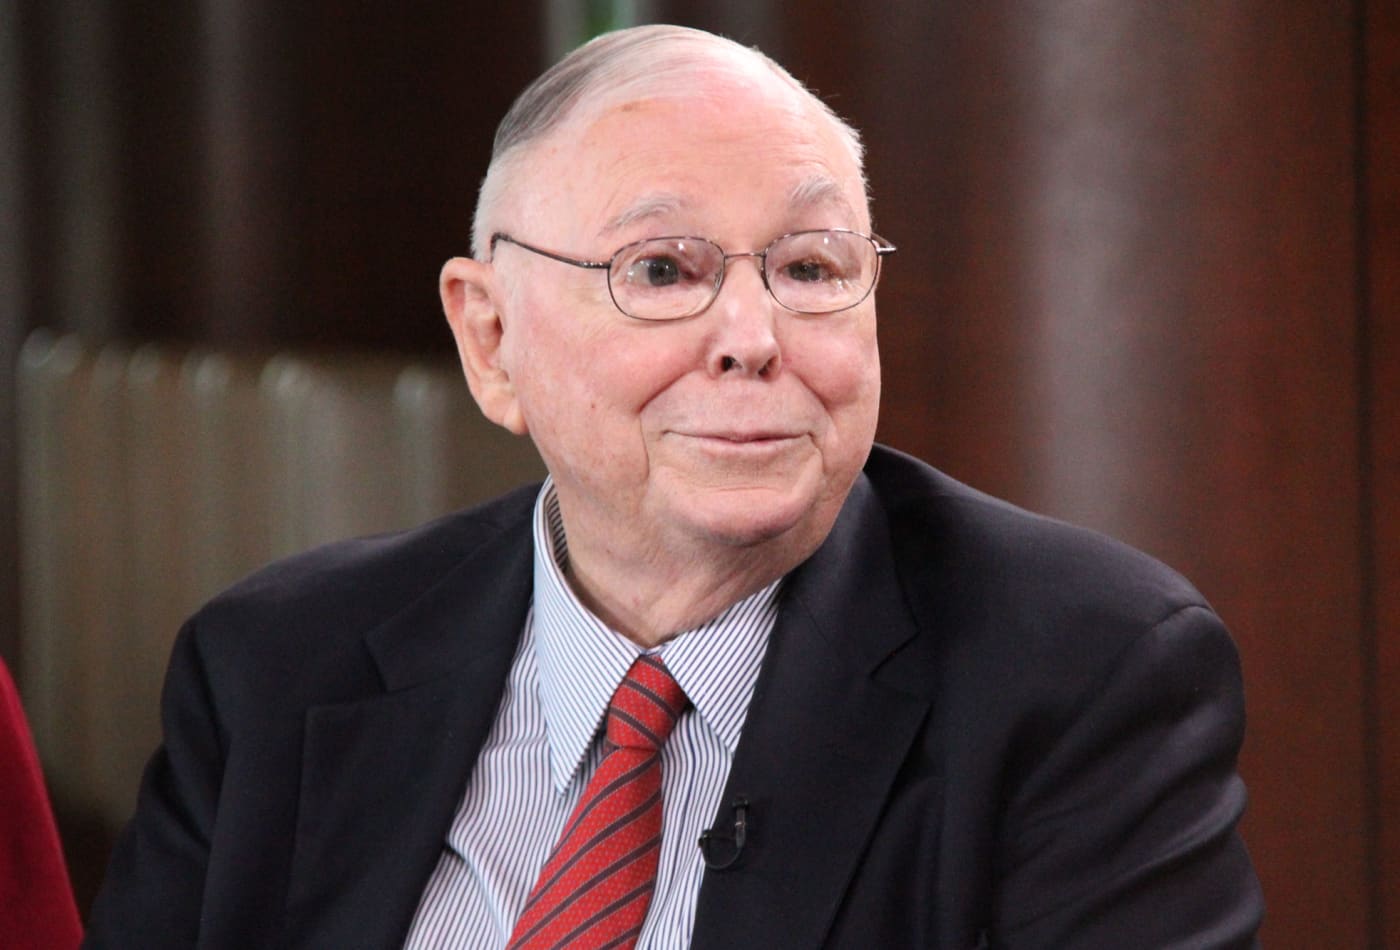 Remembering Charlie Munger: Investment Luminary and Warren Buffett's Right-Hand,Passes Away at 99